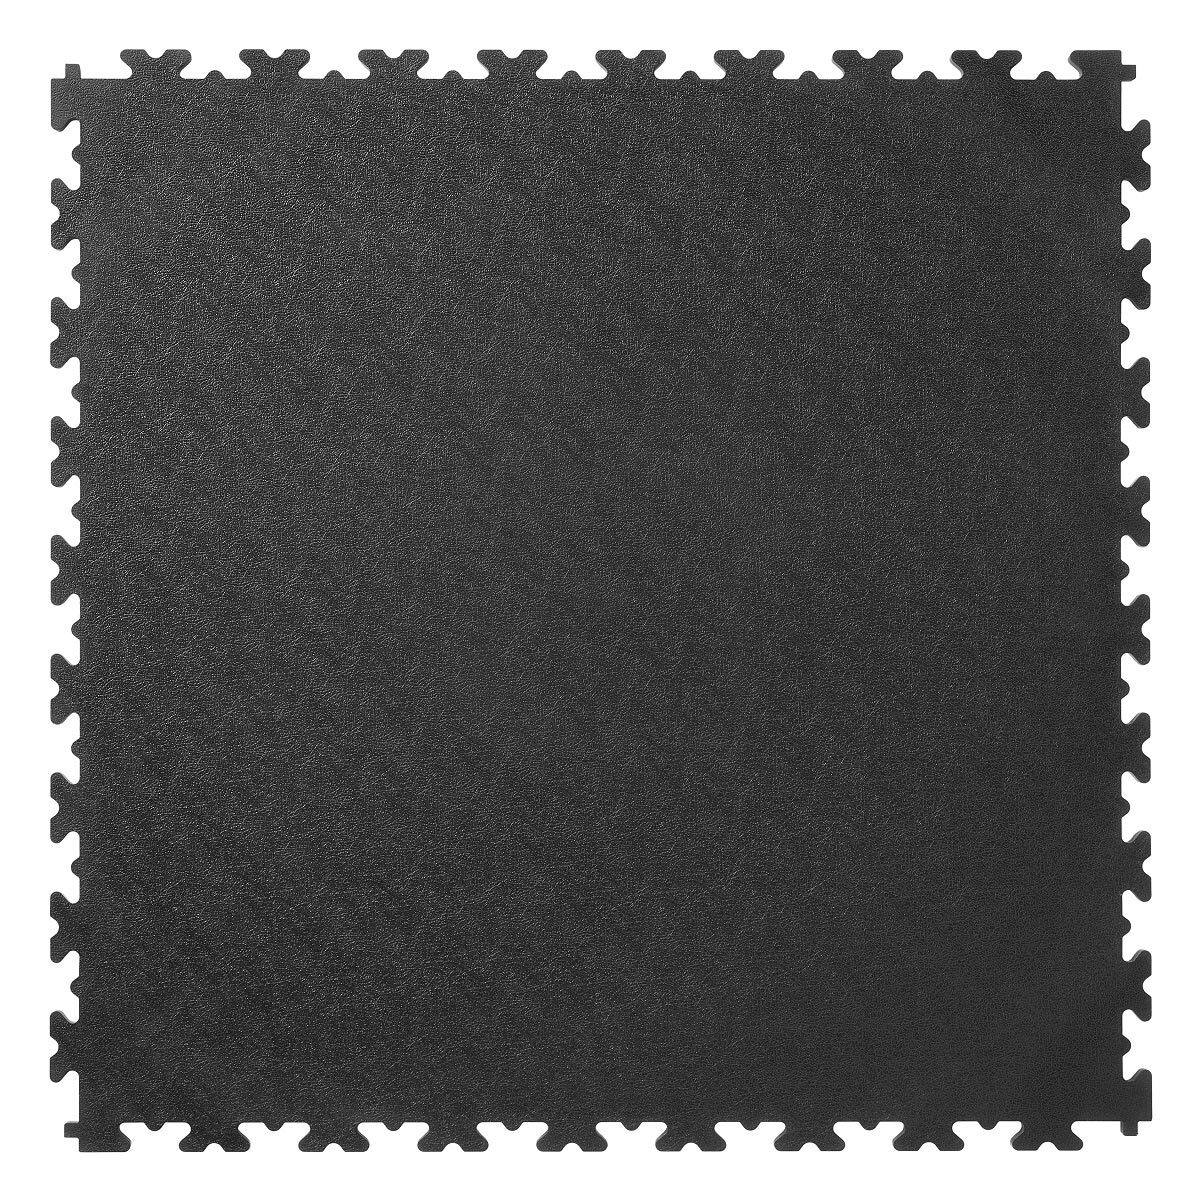 Klikflor X500 Garage Floor Tiles in Black (496 x 496 x 7mm) - 4 Pack